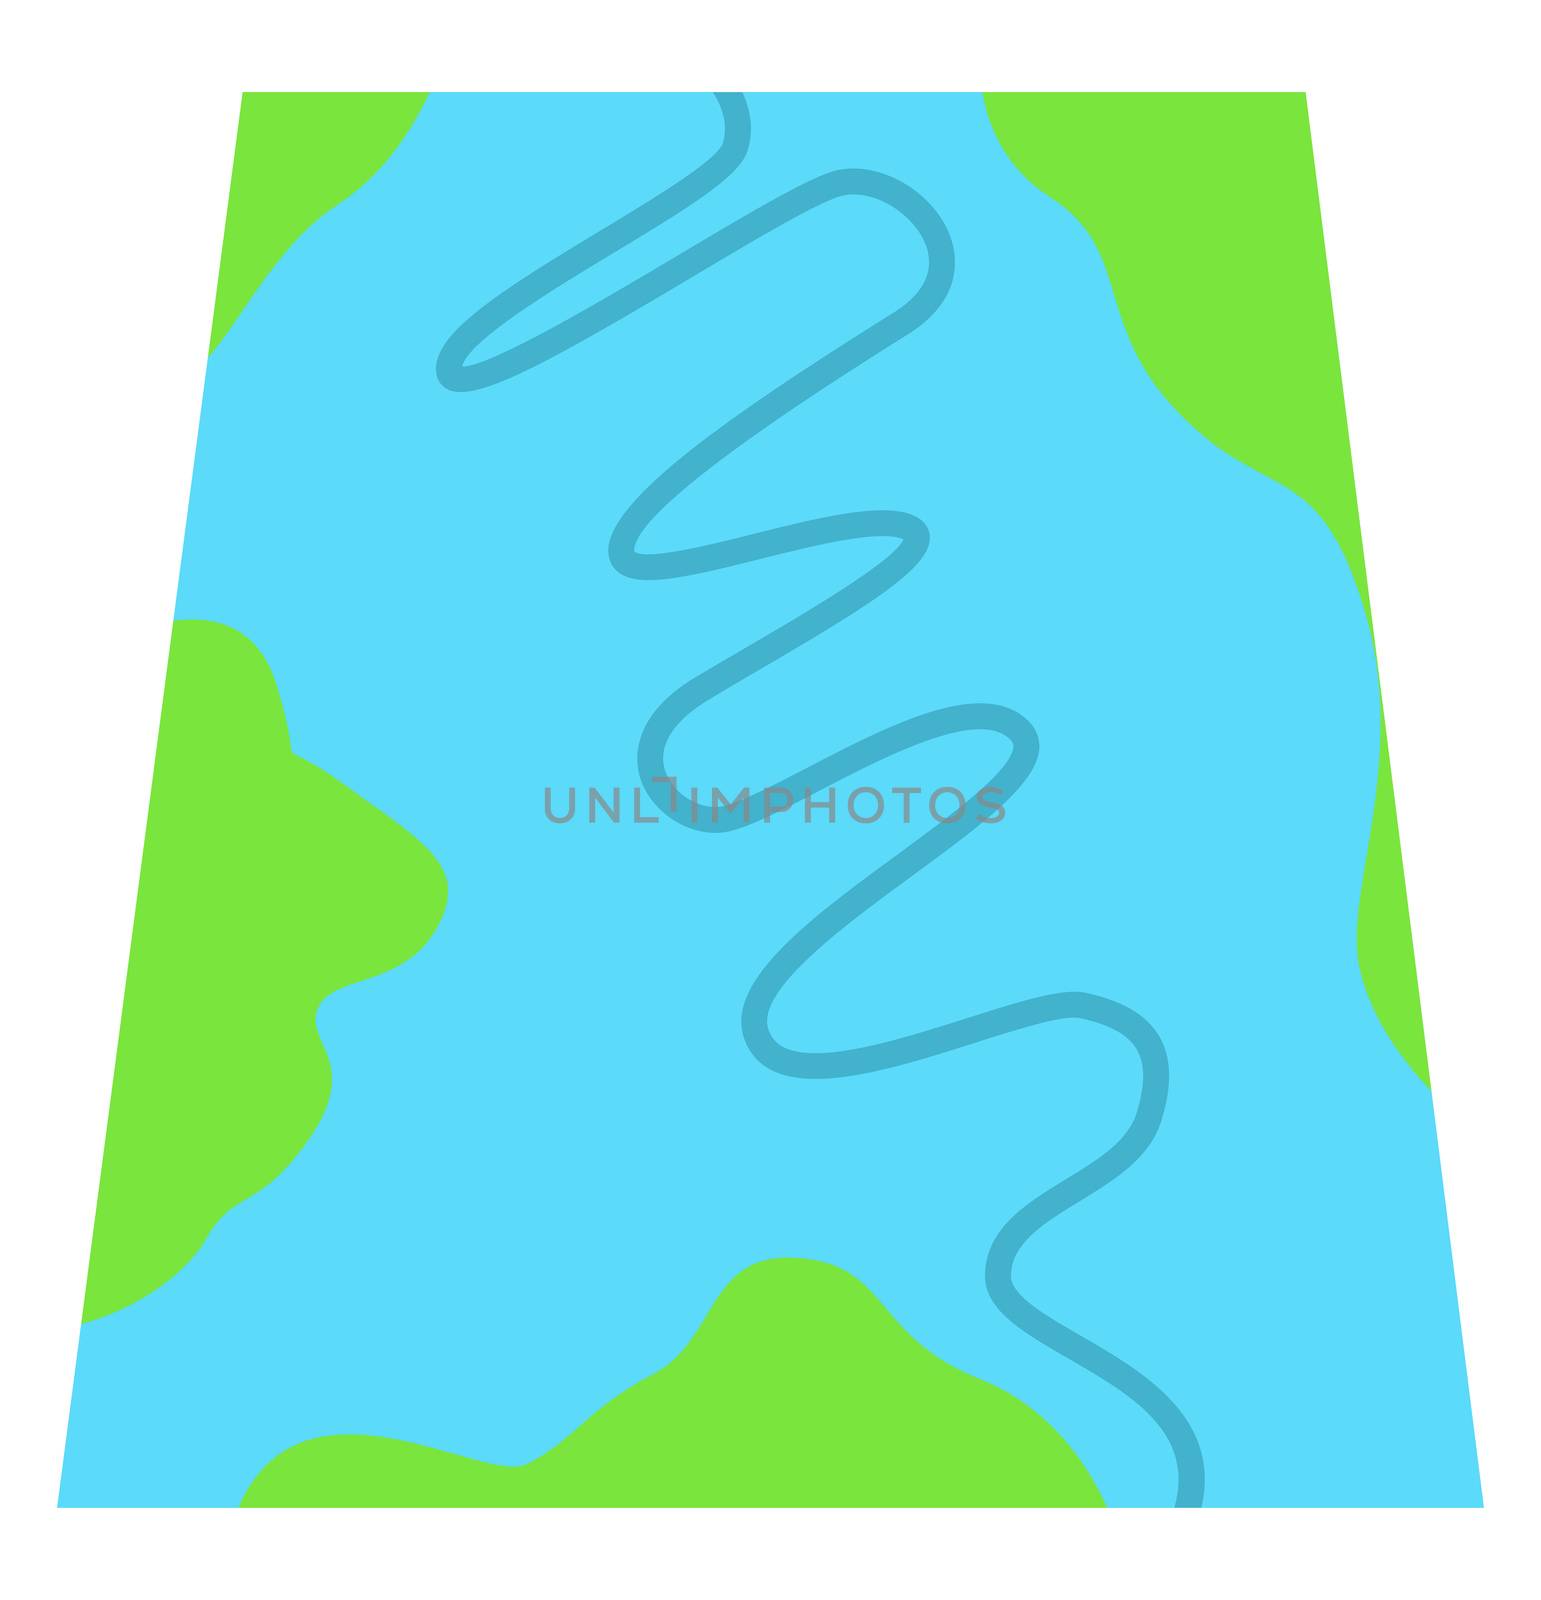 Map, illustration, vector on white background